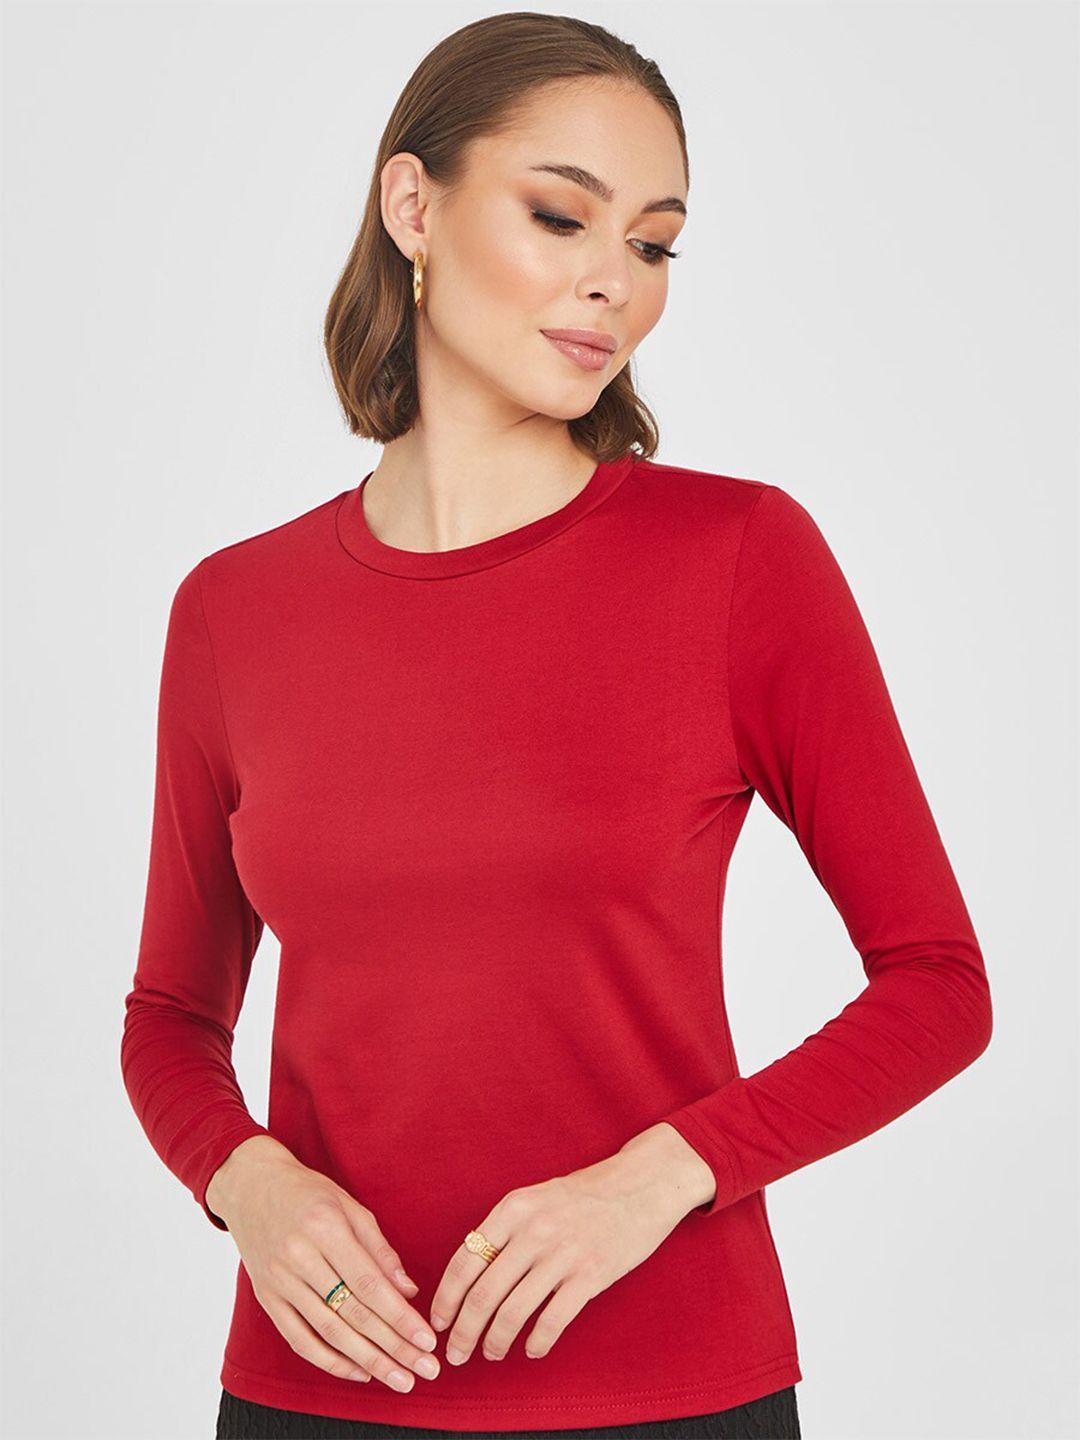 styli women red long sleeves regular length slim fit t-shirt